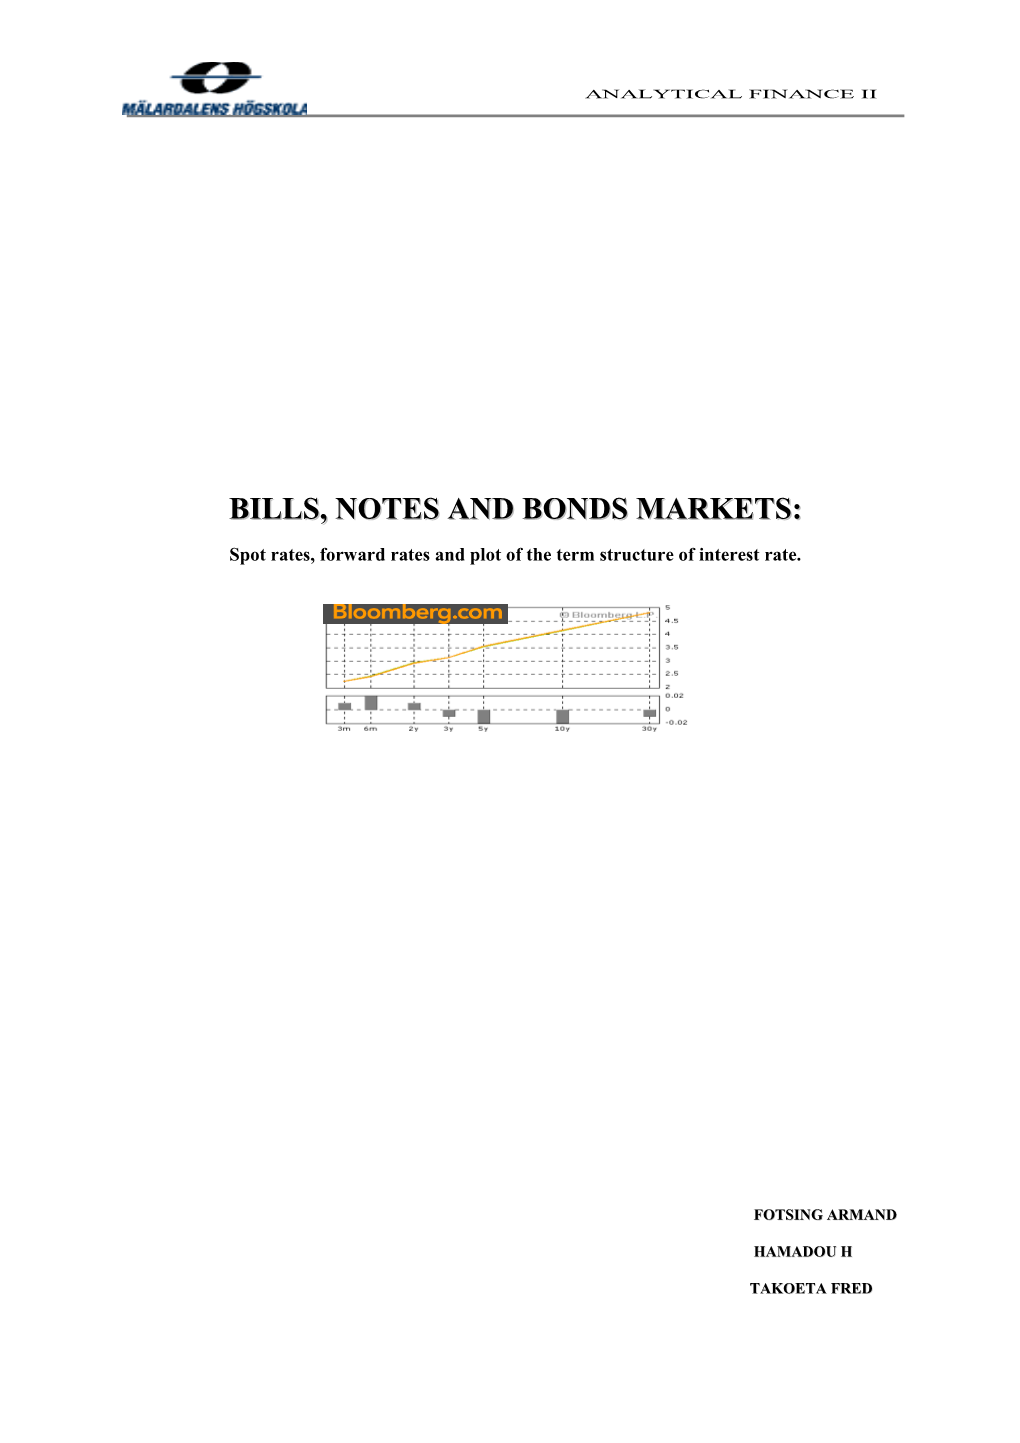 Bills, Notes and Bonds Markets